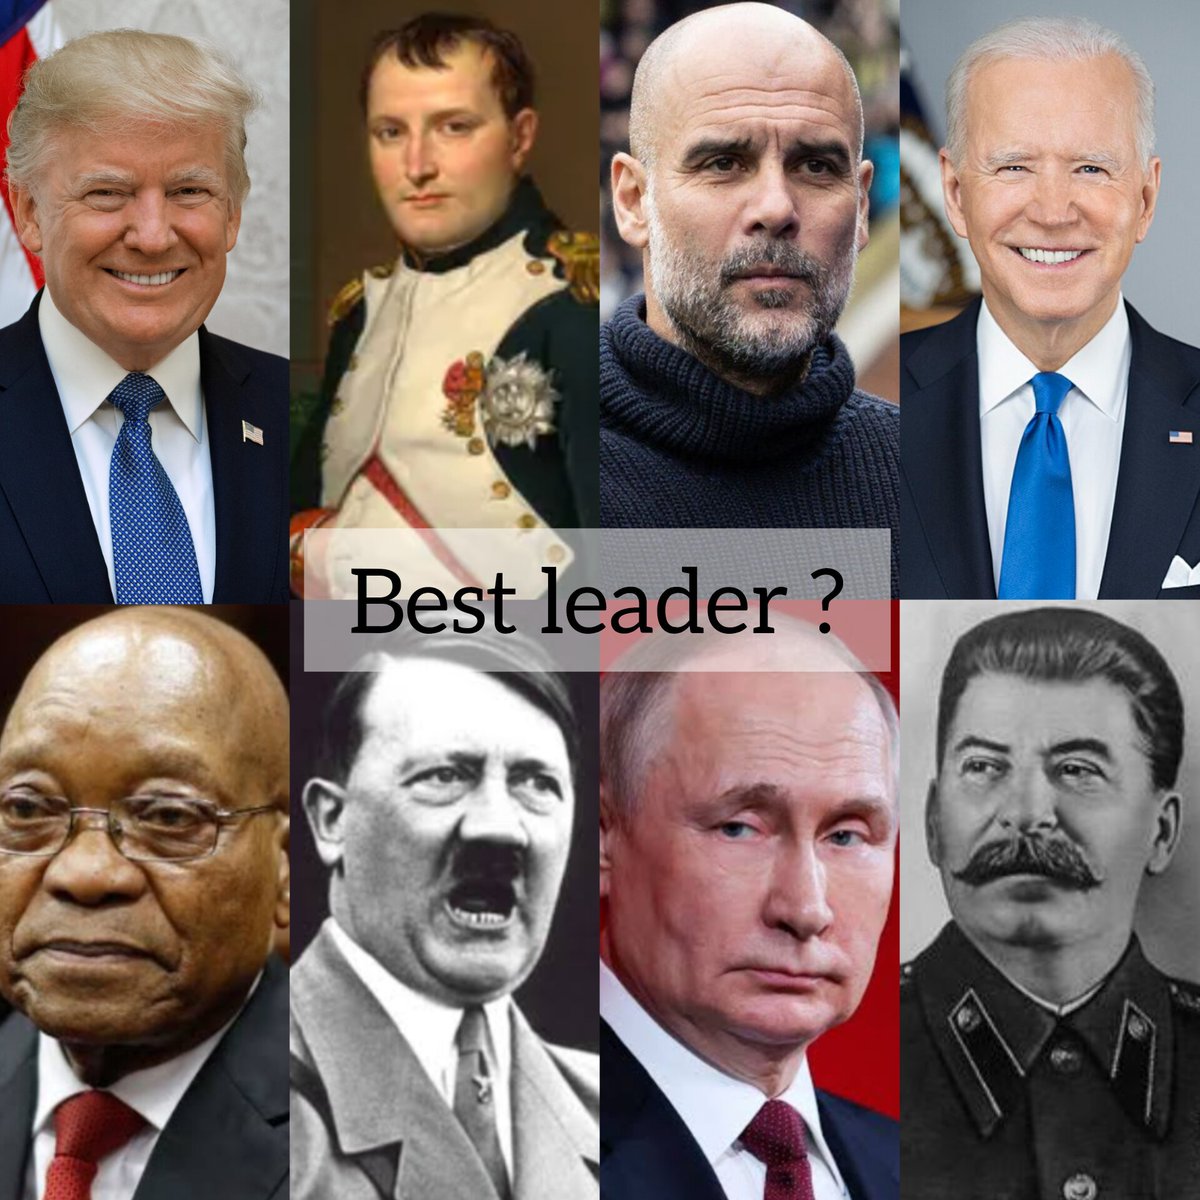 Best leader ? #pepguardiola #DonaldTrump #JoeBiden #Napoleon #VladimirPutin #jacobzuma #adolfhitler #josephstalin